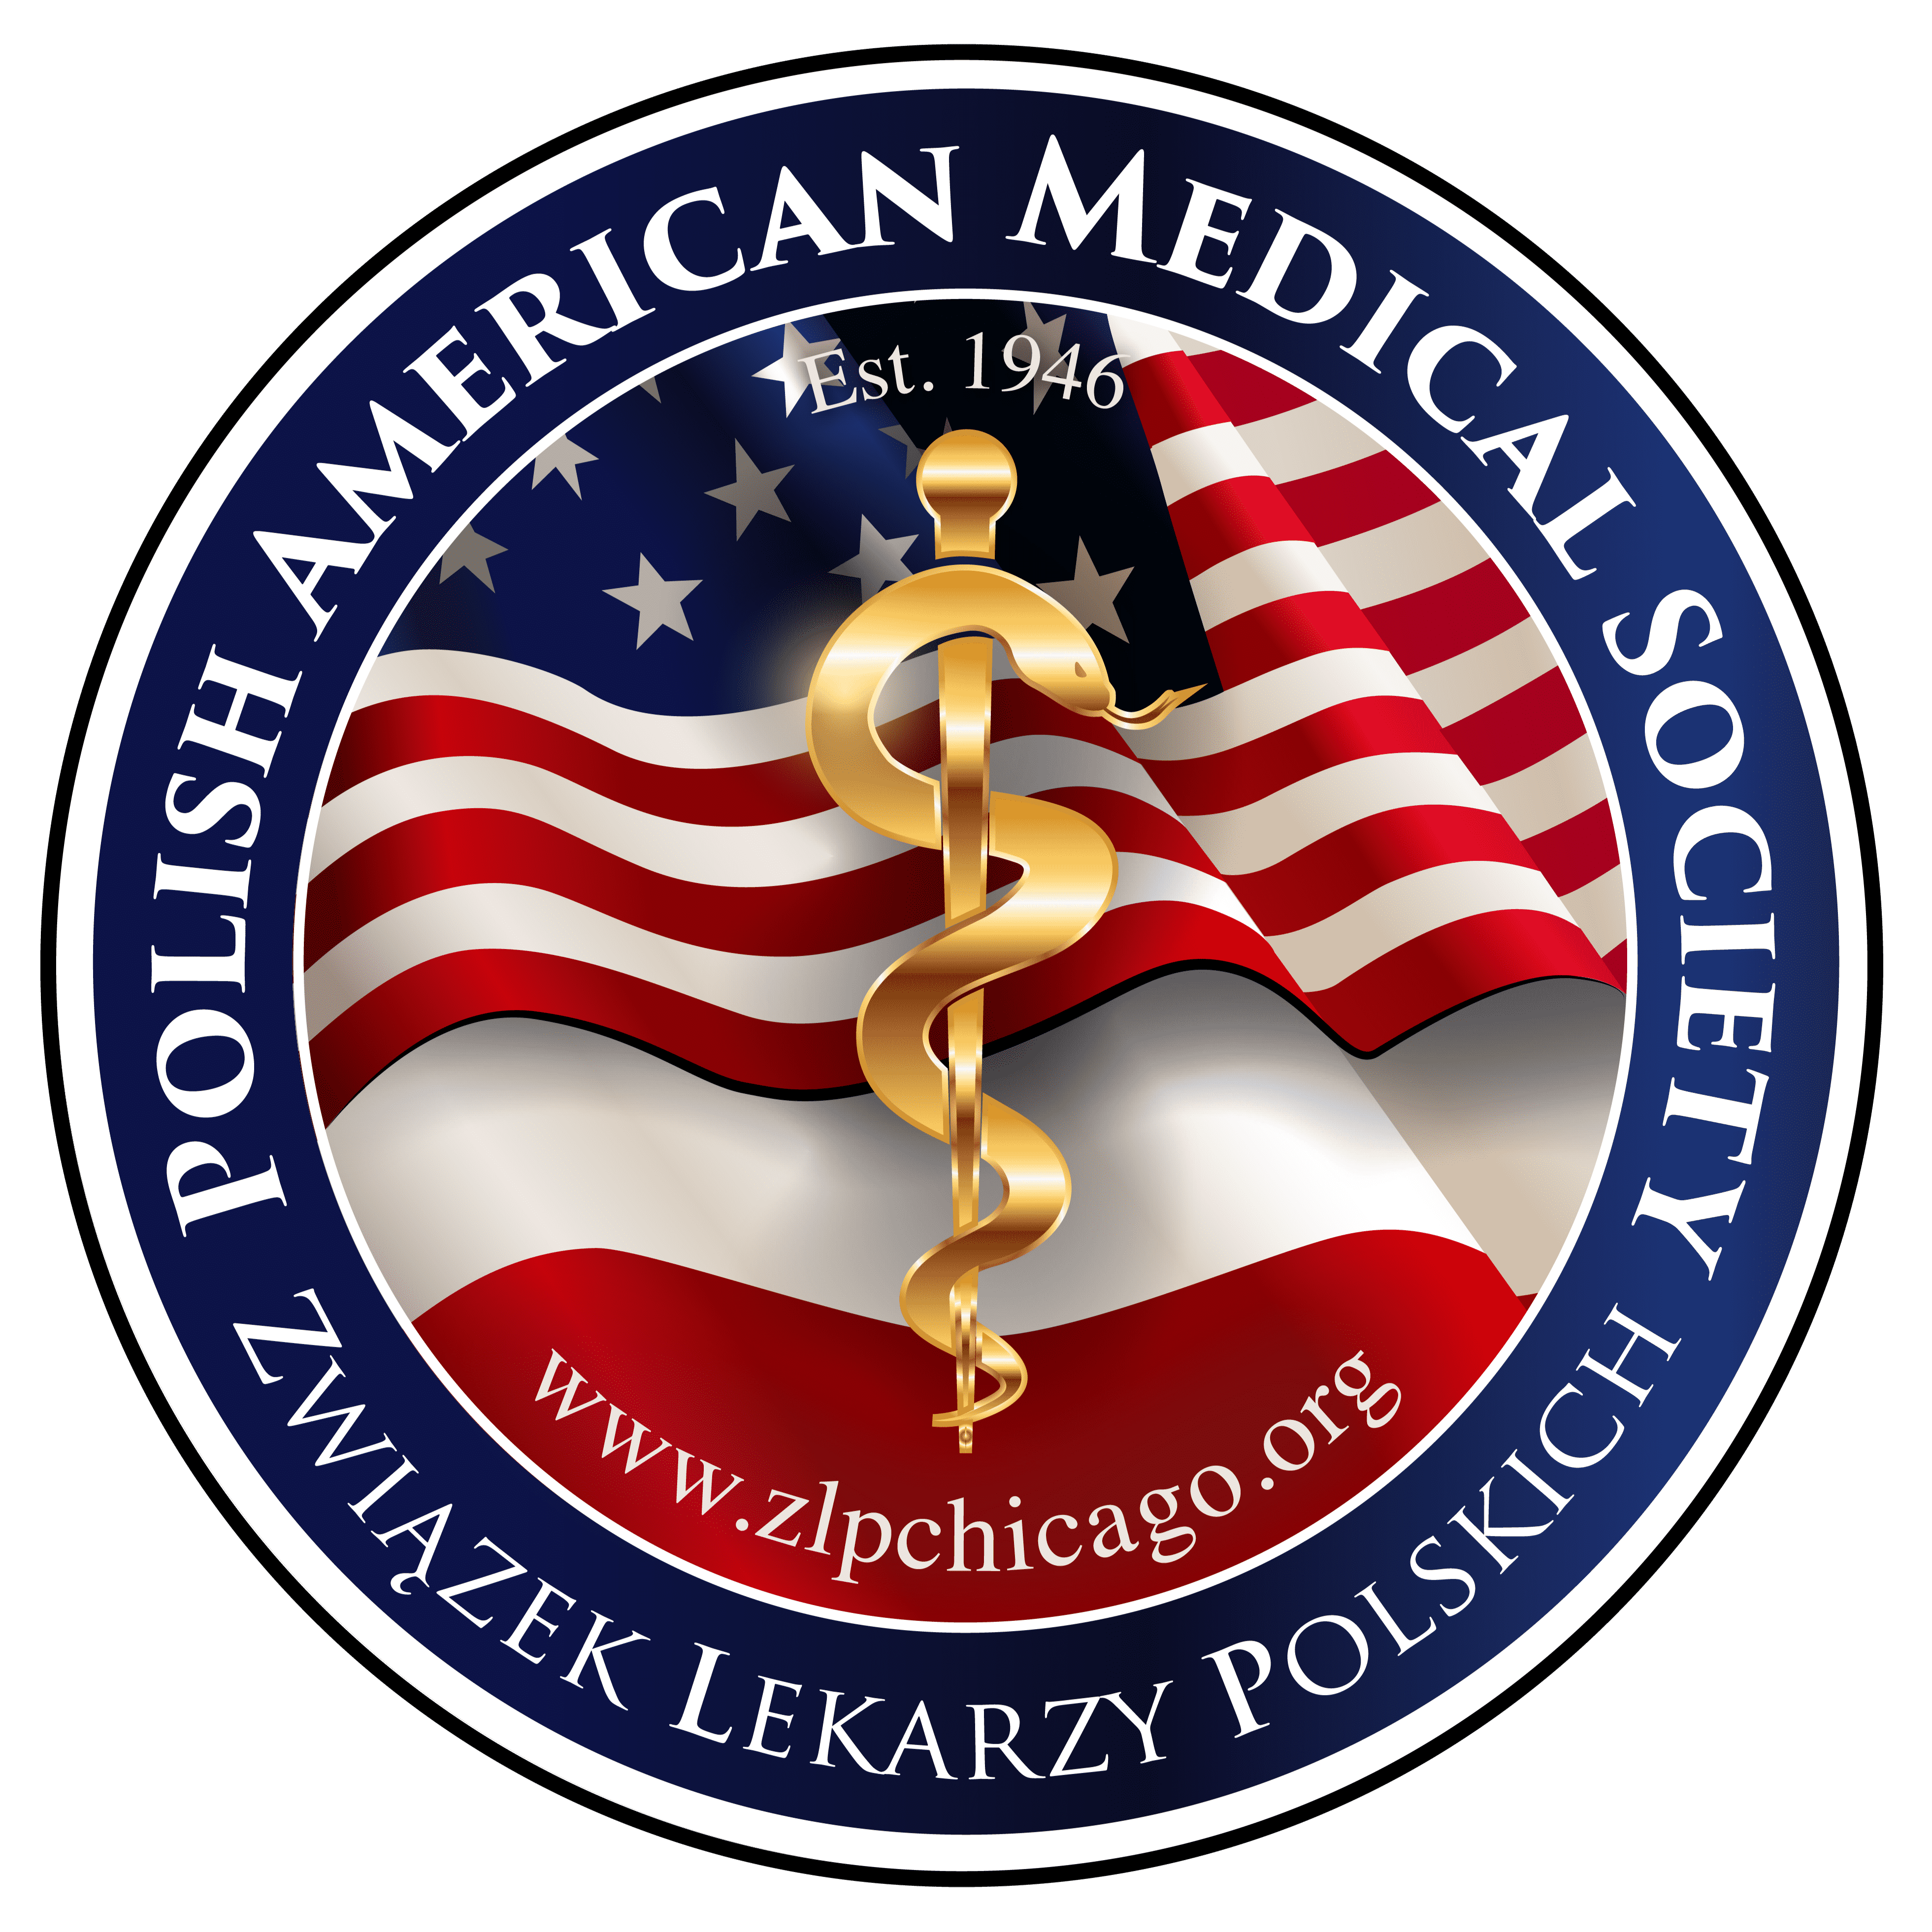 Polish Organizations Near Me - Polish American Medical Society in Chicago